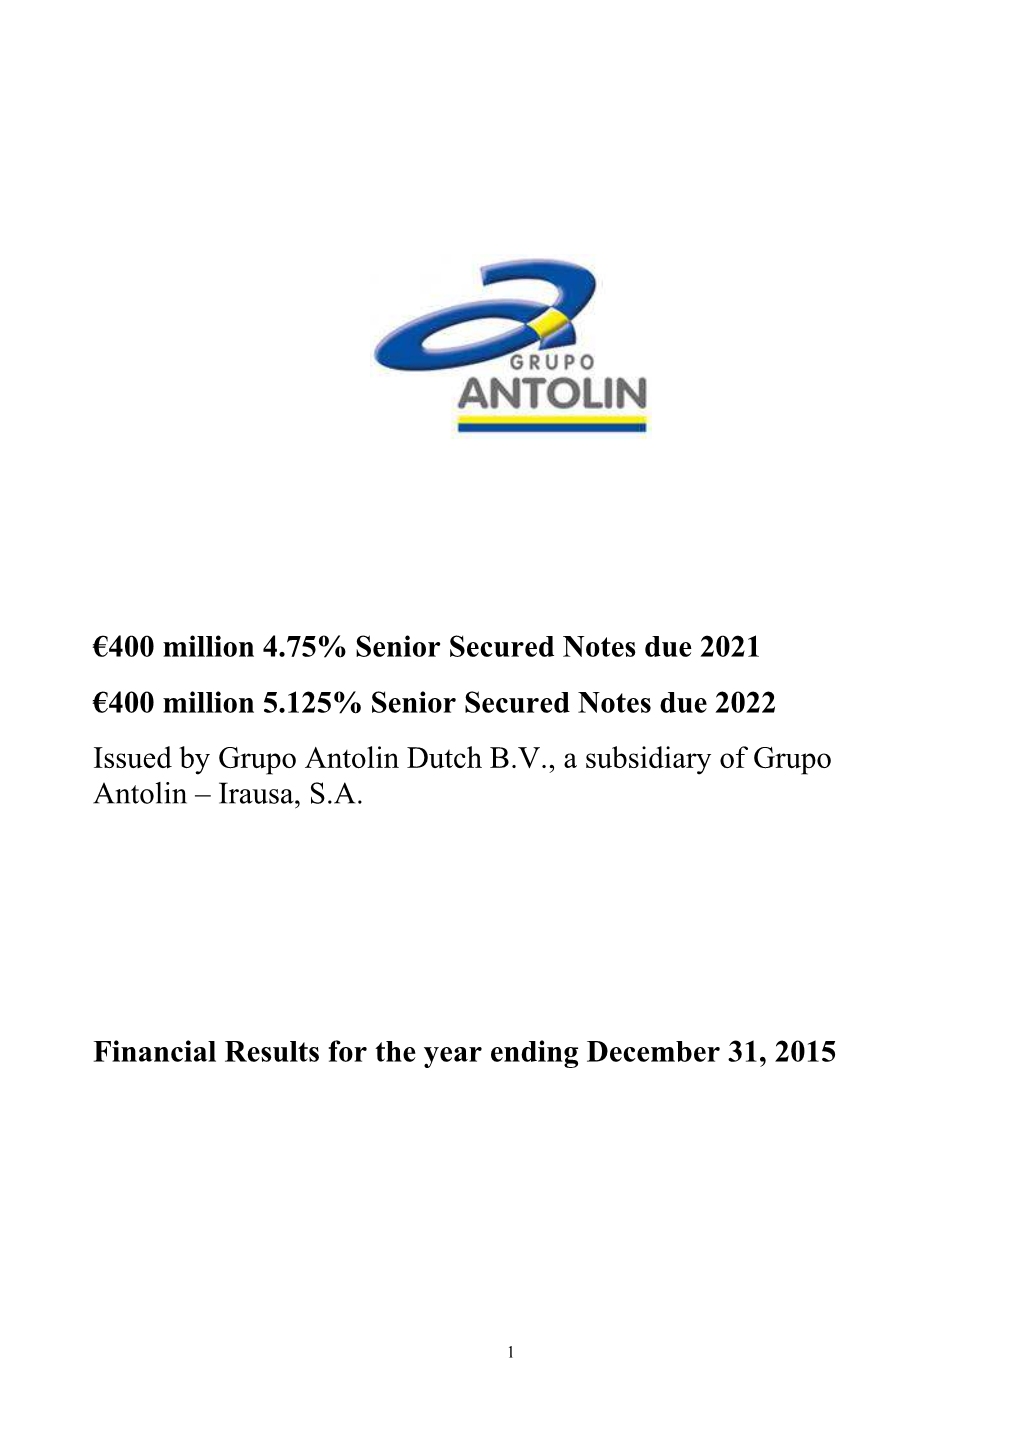 Grupo Antolin FY 2015 Results